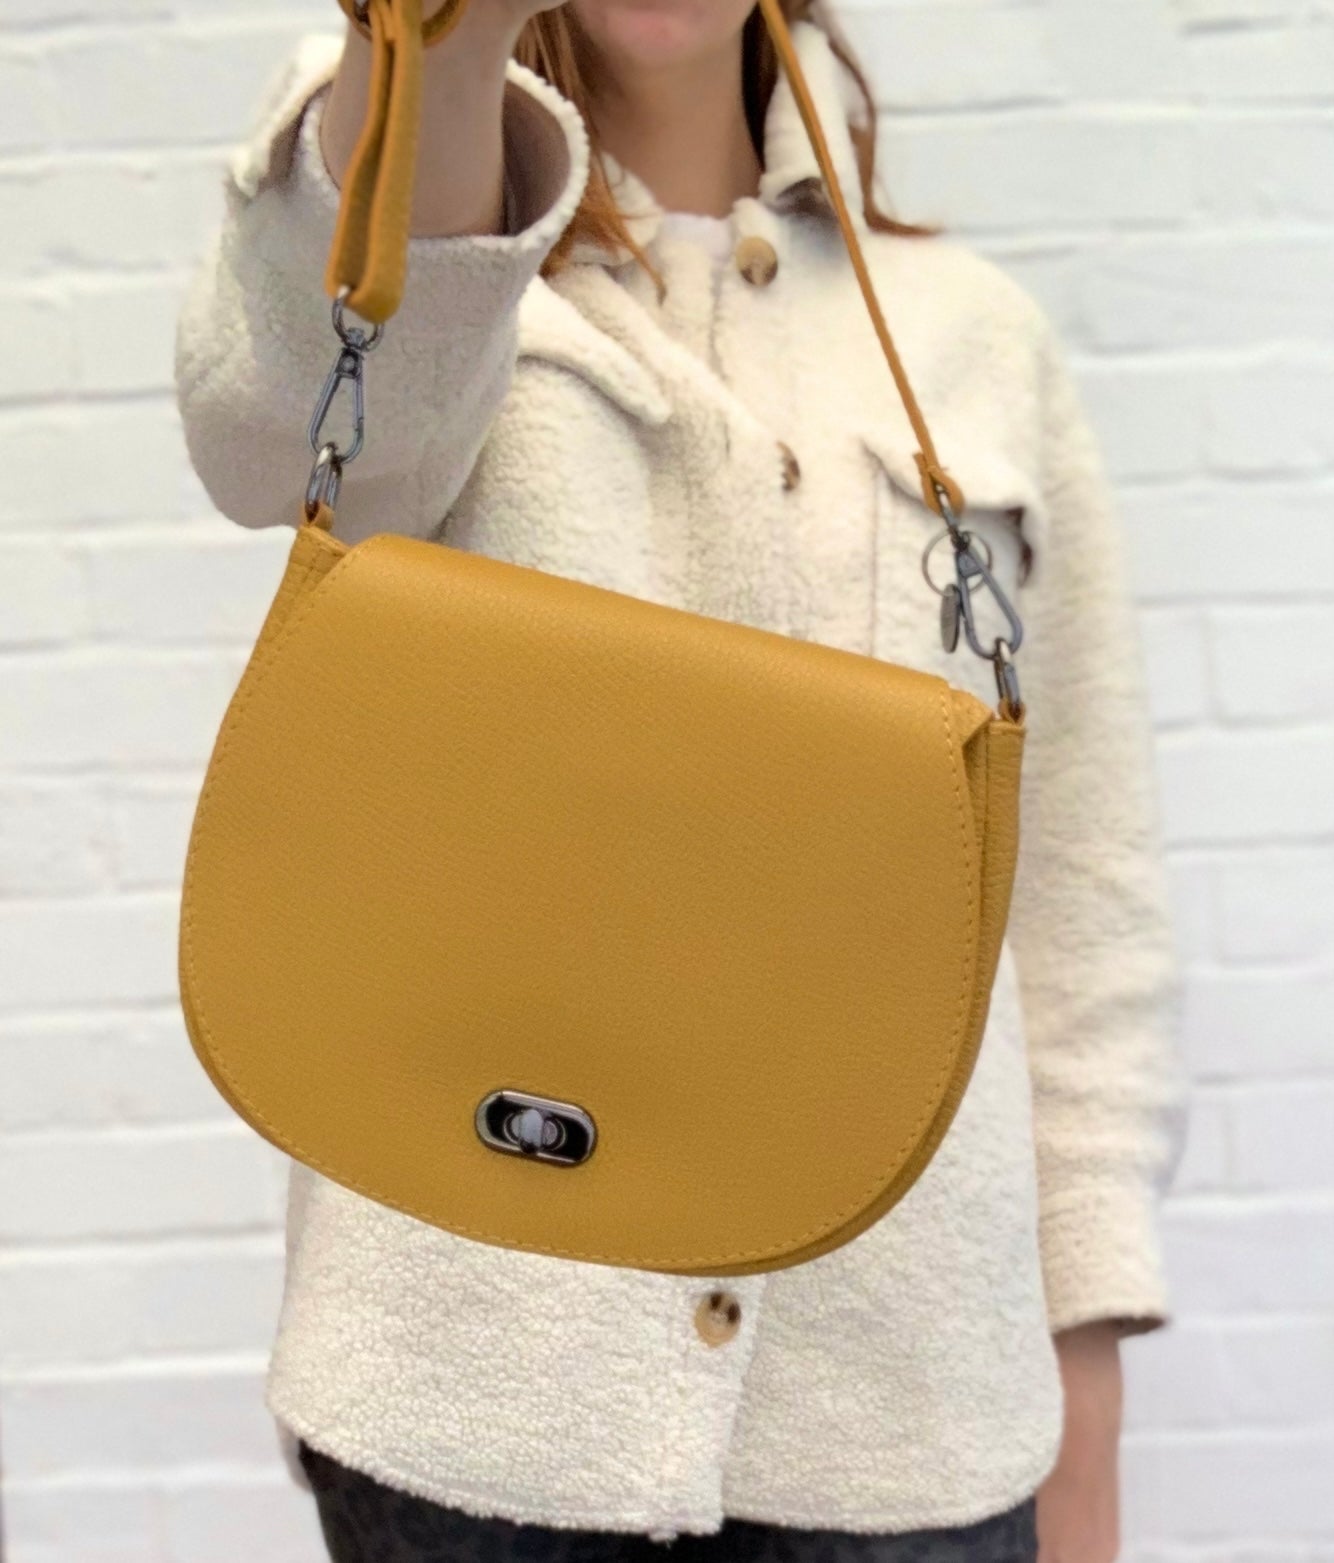 Mustard Leather Satchel Bag